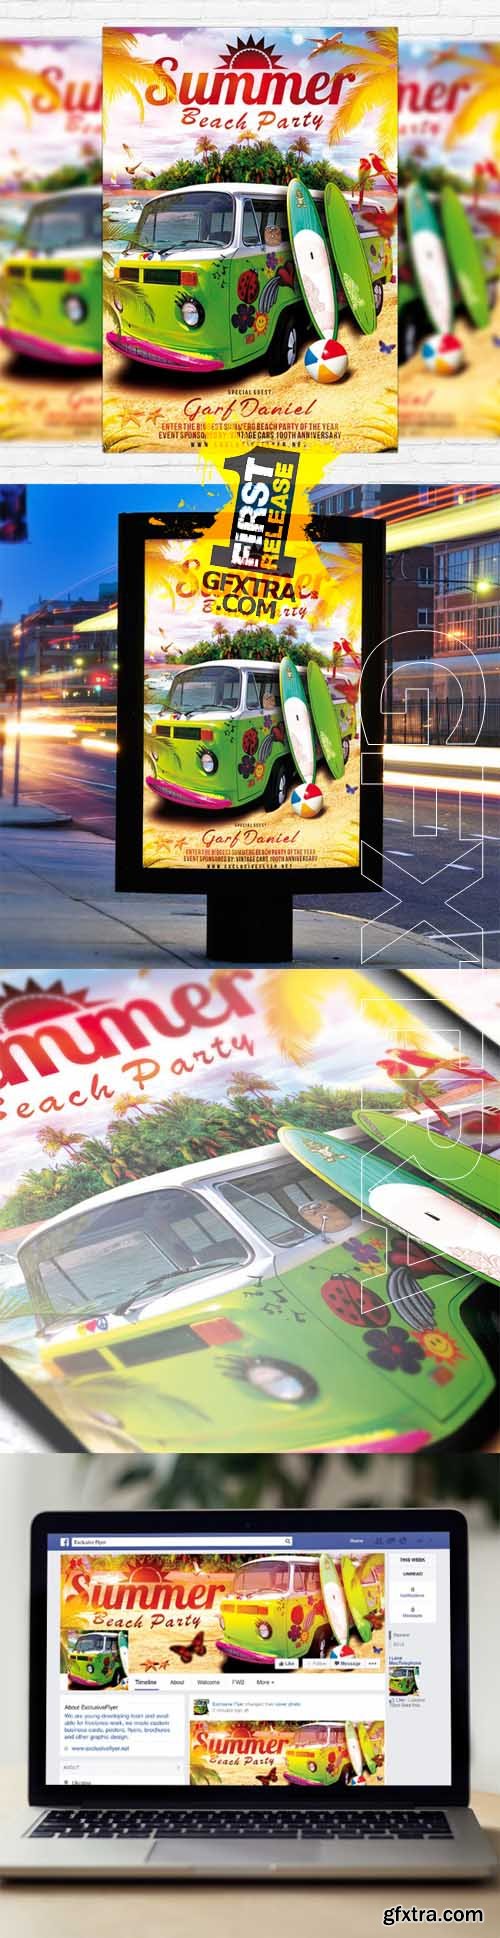 Summer Beach Party 2 - Flyer Template + Facebook Cover